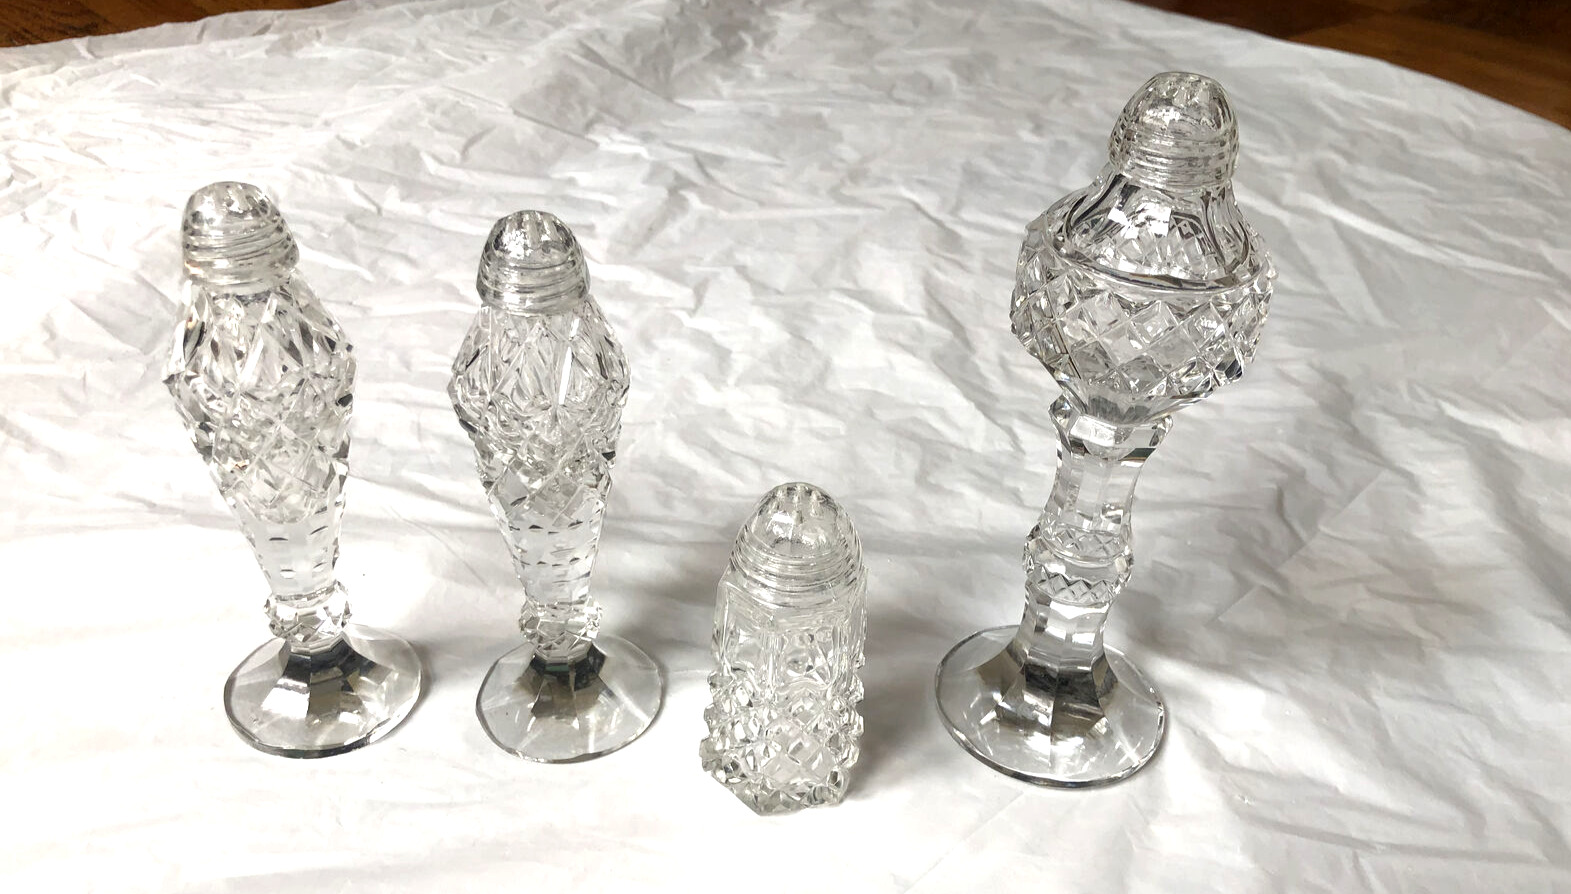 4 Vintage Czech cut glass salt and pepper shakers